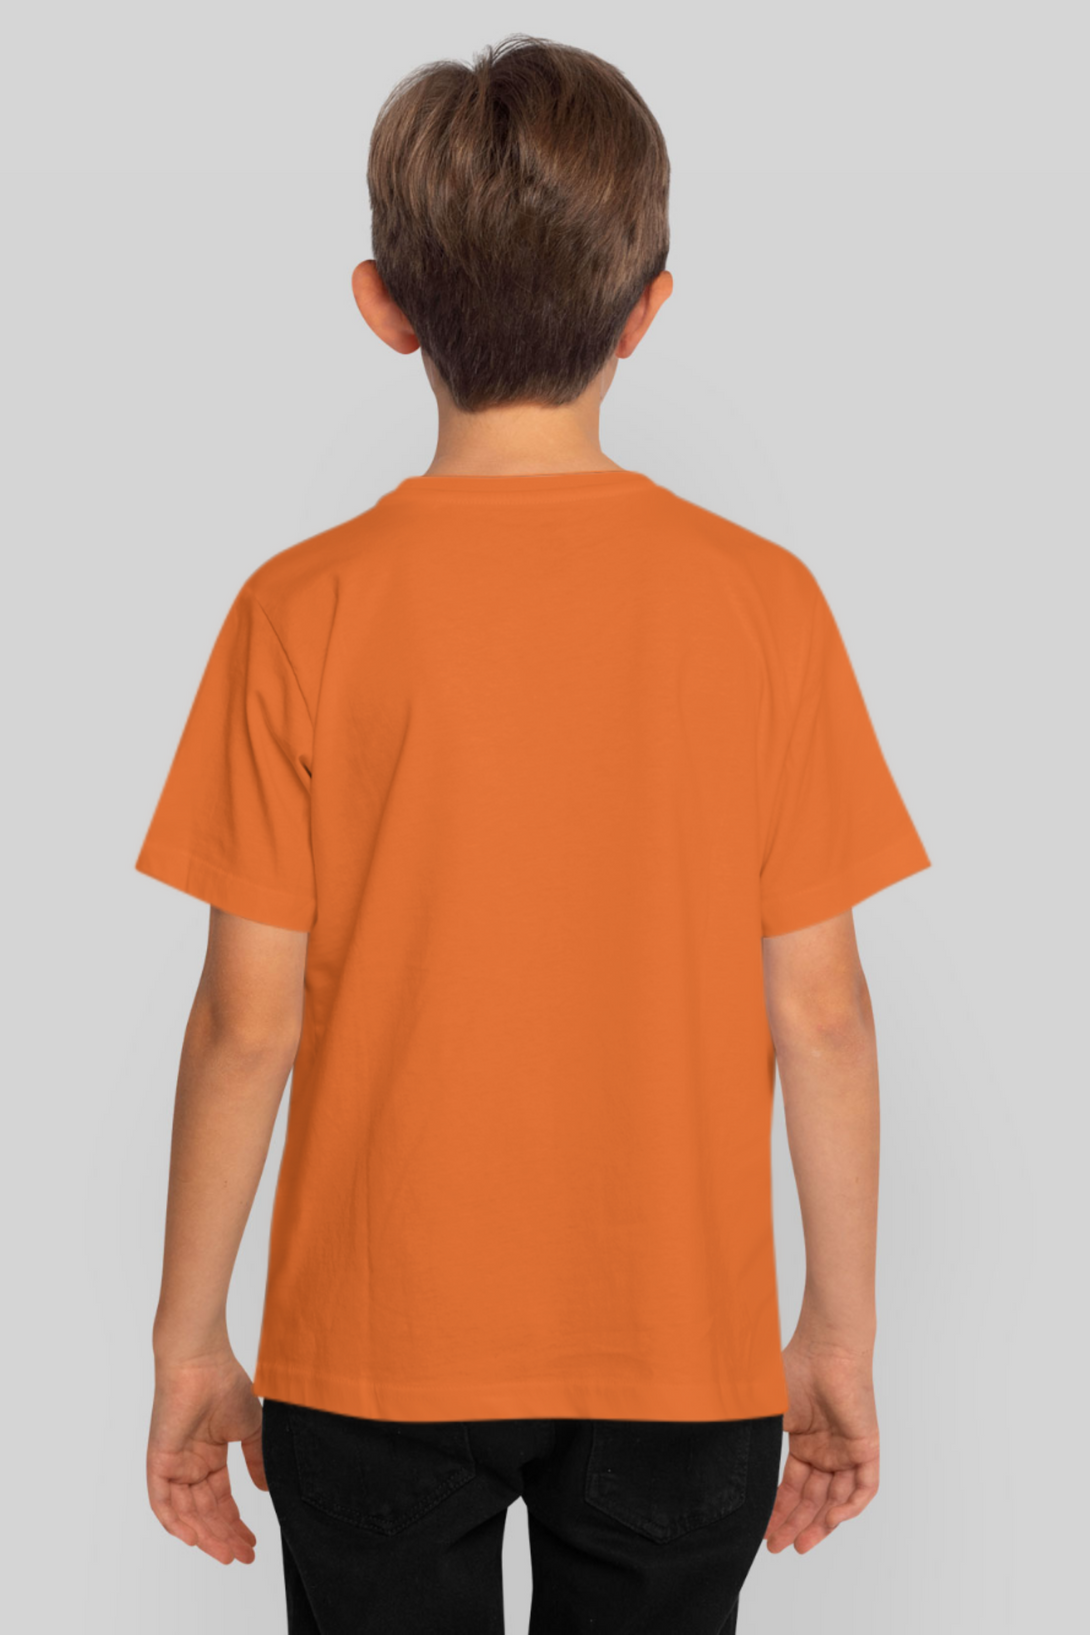 Orange T-Shirt For Boy - WowWaves - 2